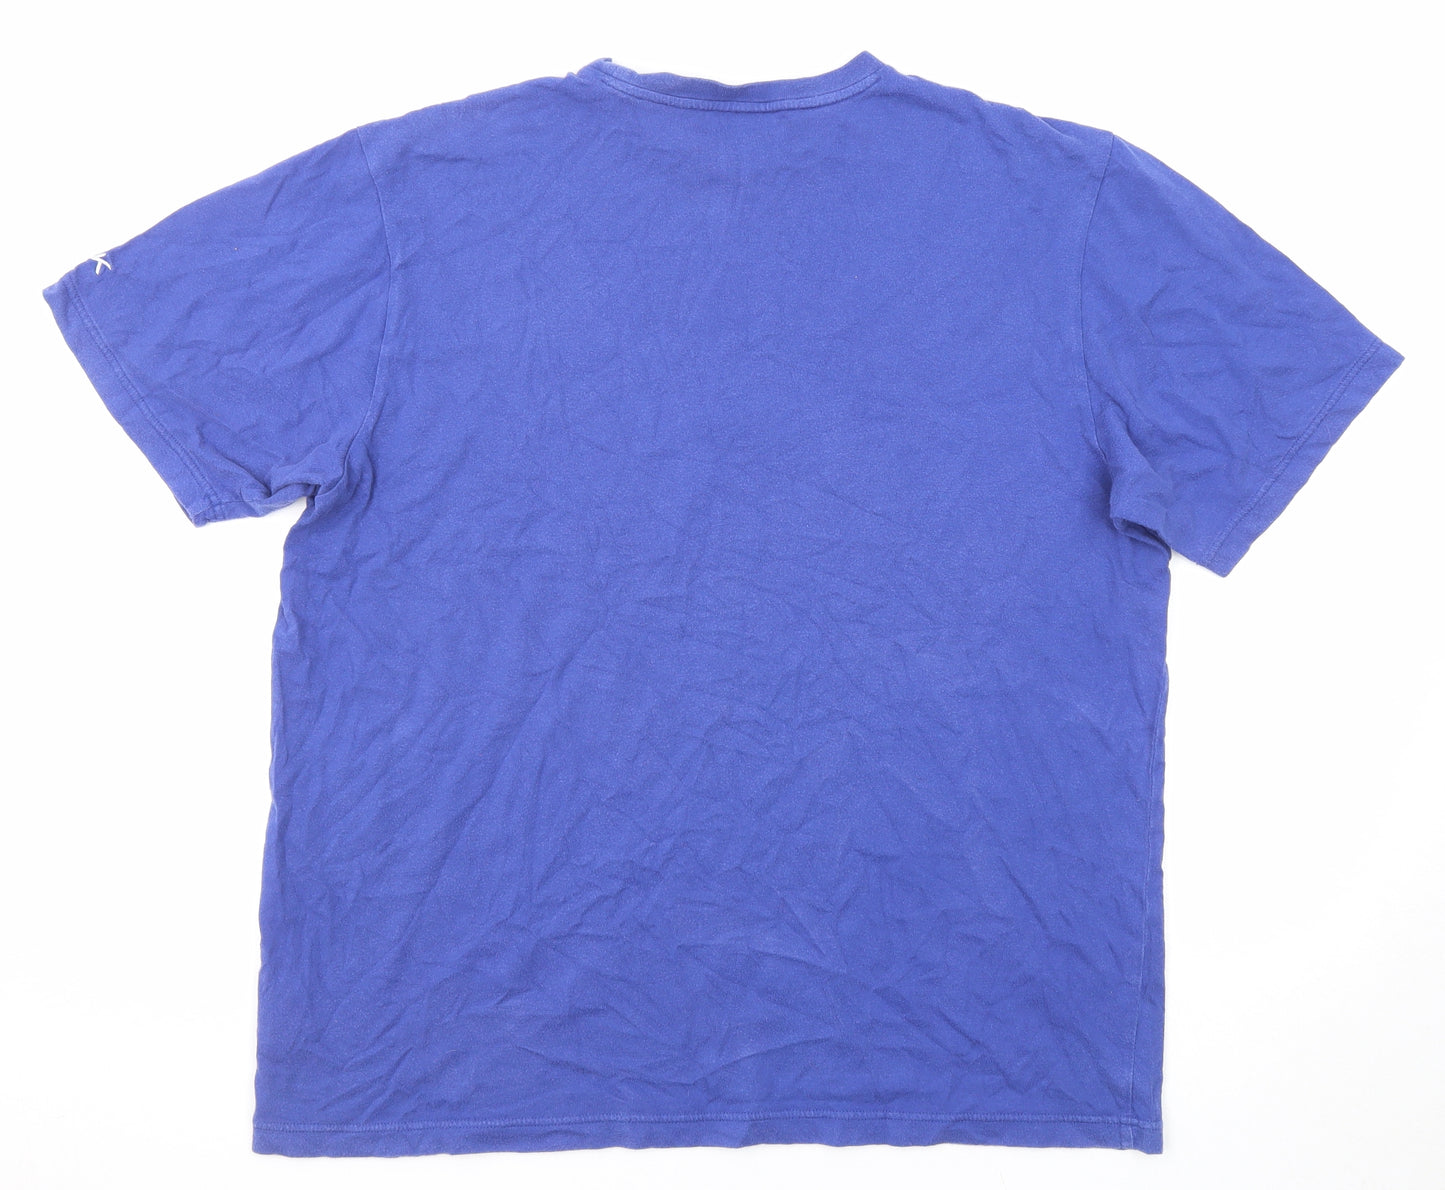 Reebok Mens Blue Cotton T-Shirt Size 2XL Round Neck - Property Of Giants